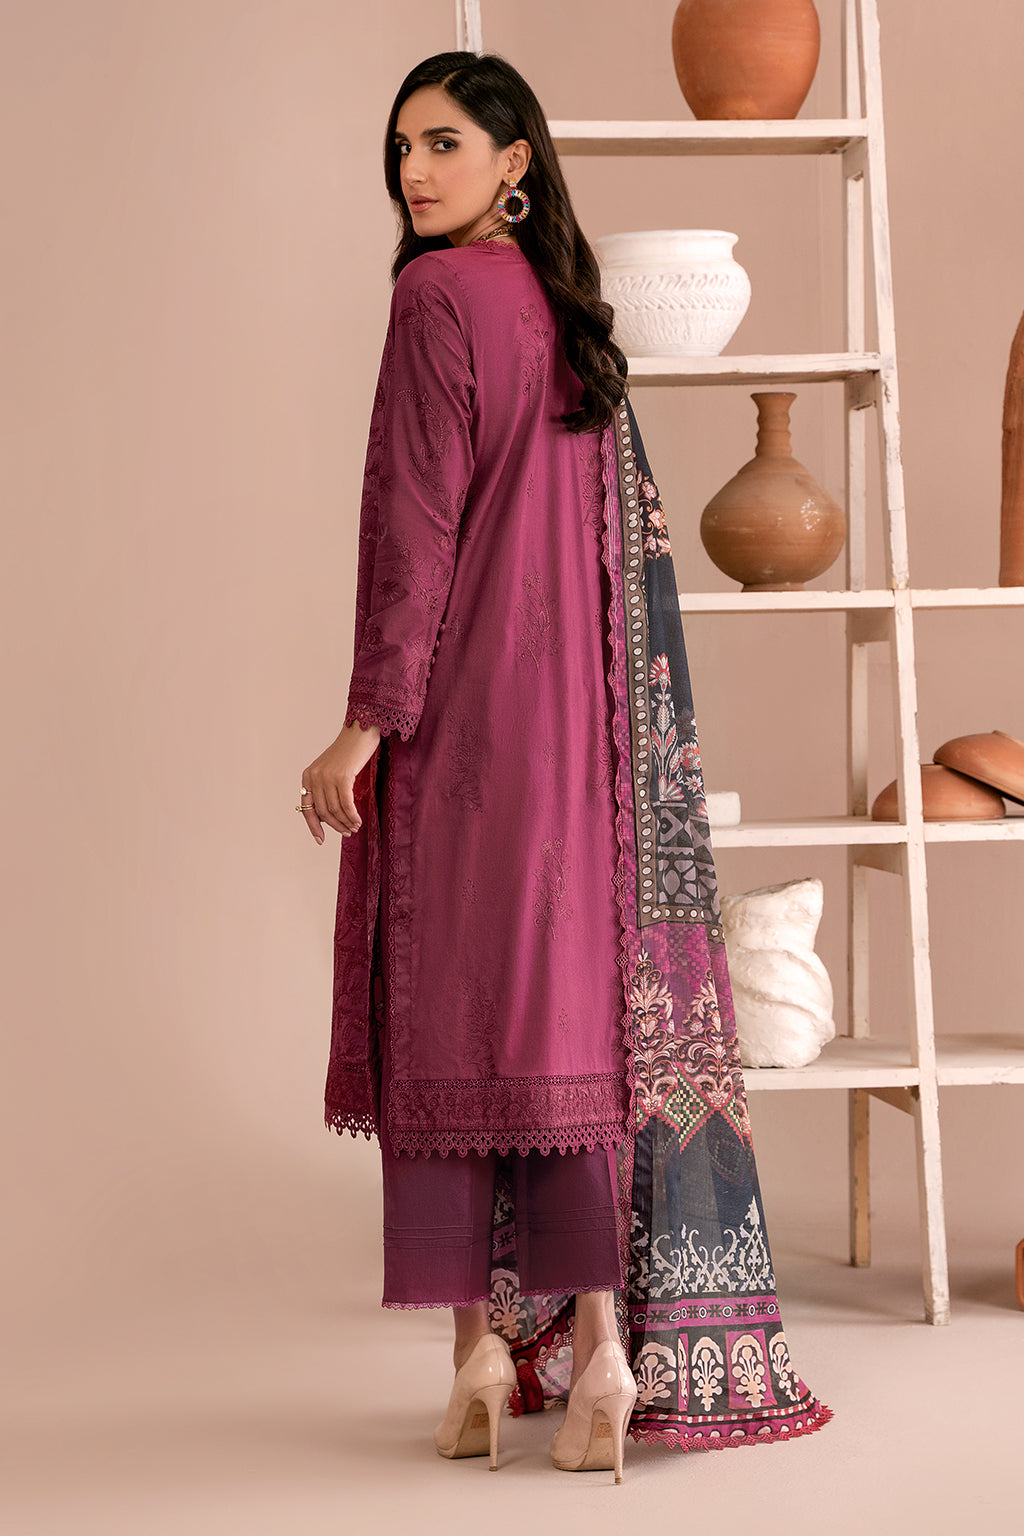 Shop Now, ZEA#6 - Eid ul Adha Lawn 2023 - Zarif -Shahana Collection UK - Wedding and Bridal Party Wear - Eid Edit 2023